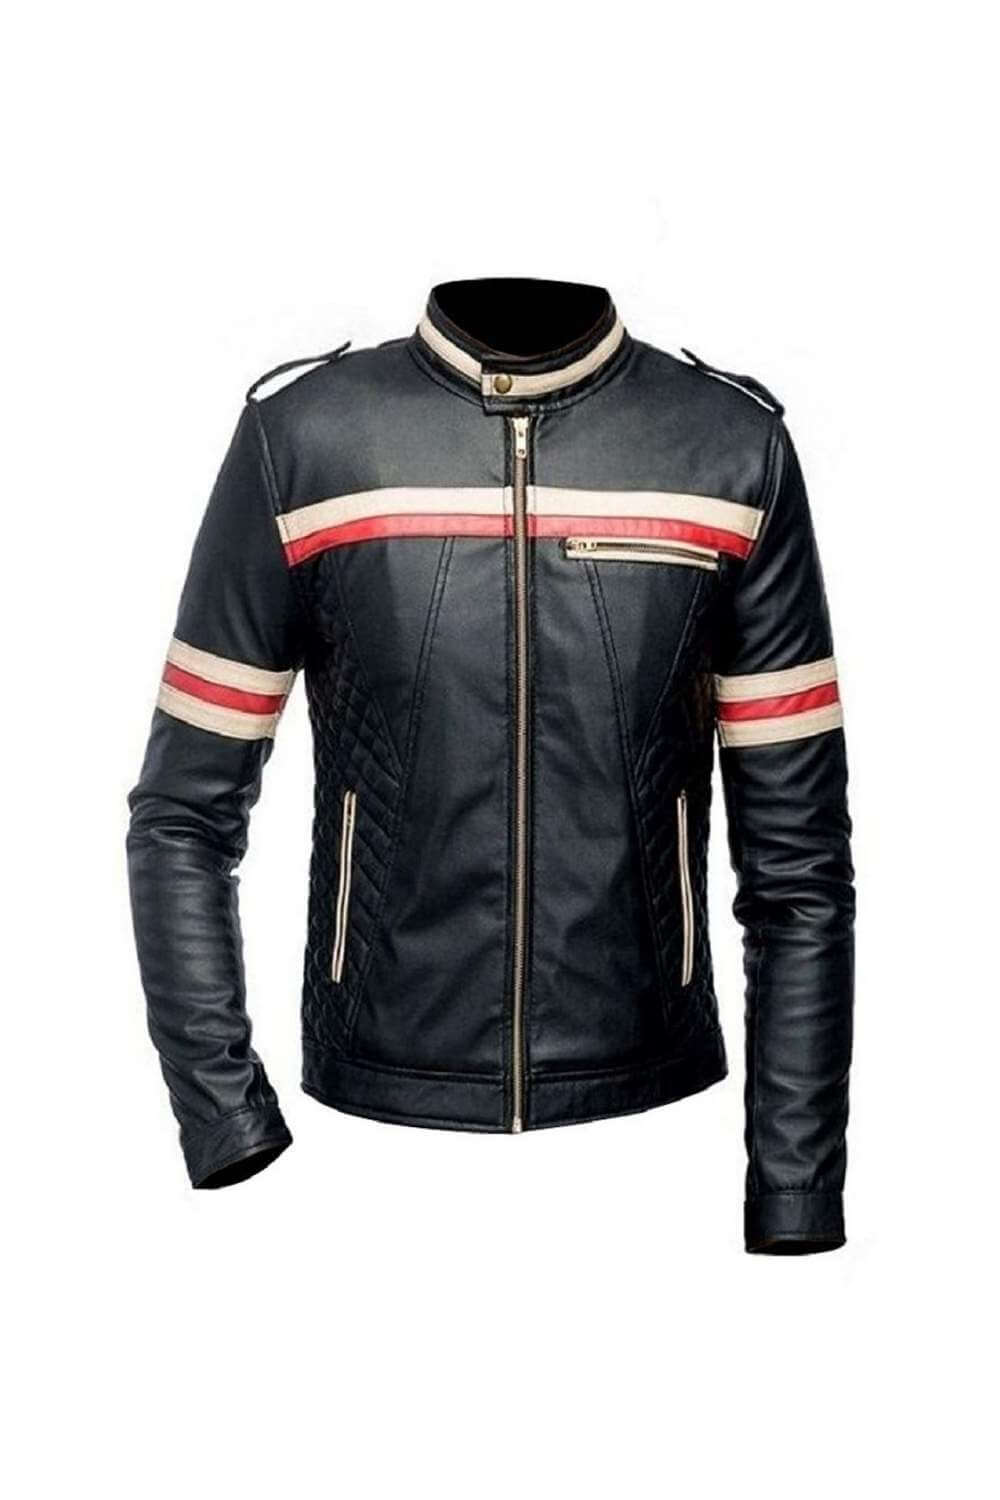 Buy Leather Biker Jackets For Men | Men's Biker Jackets